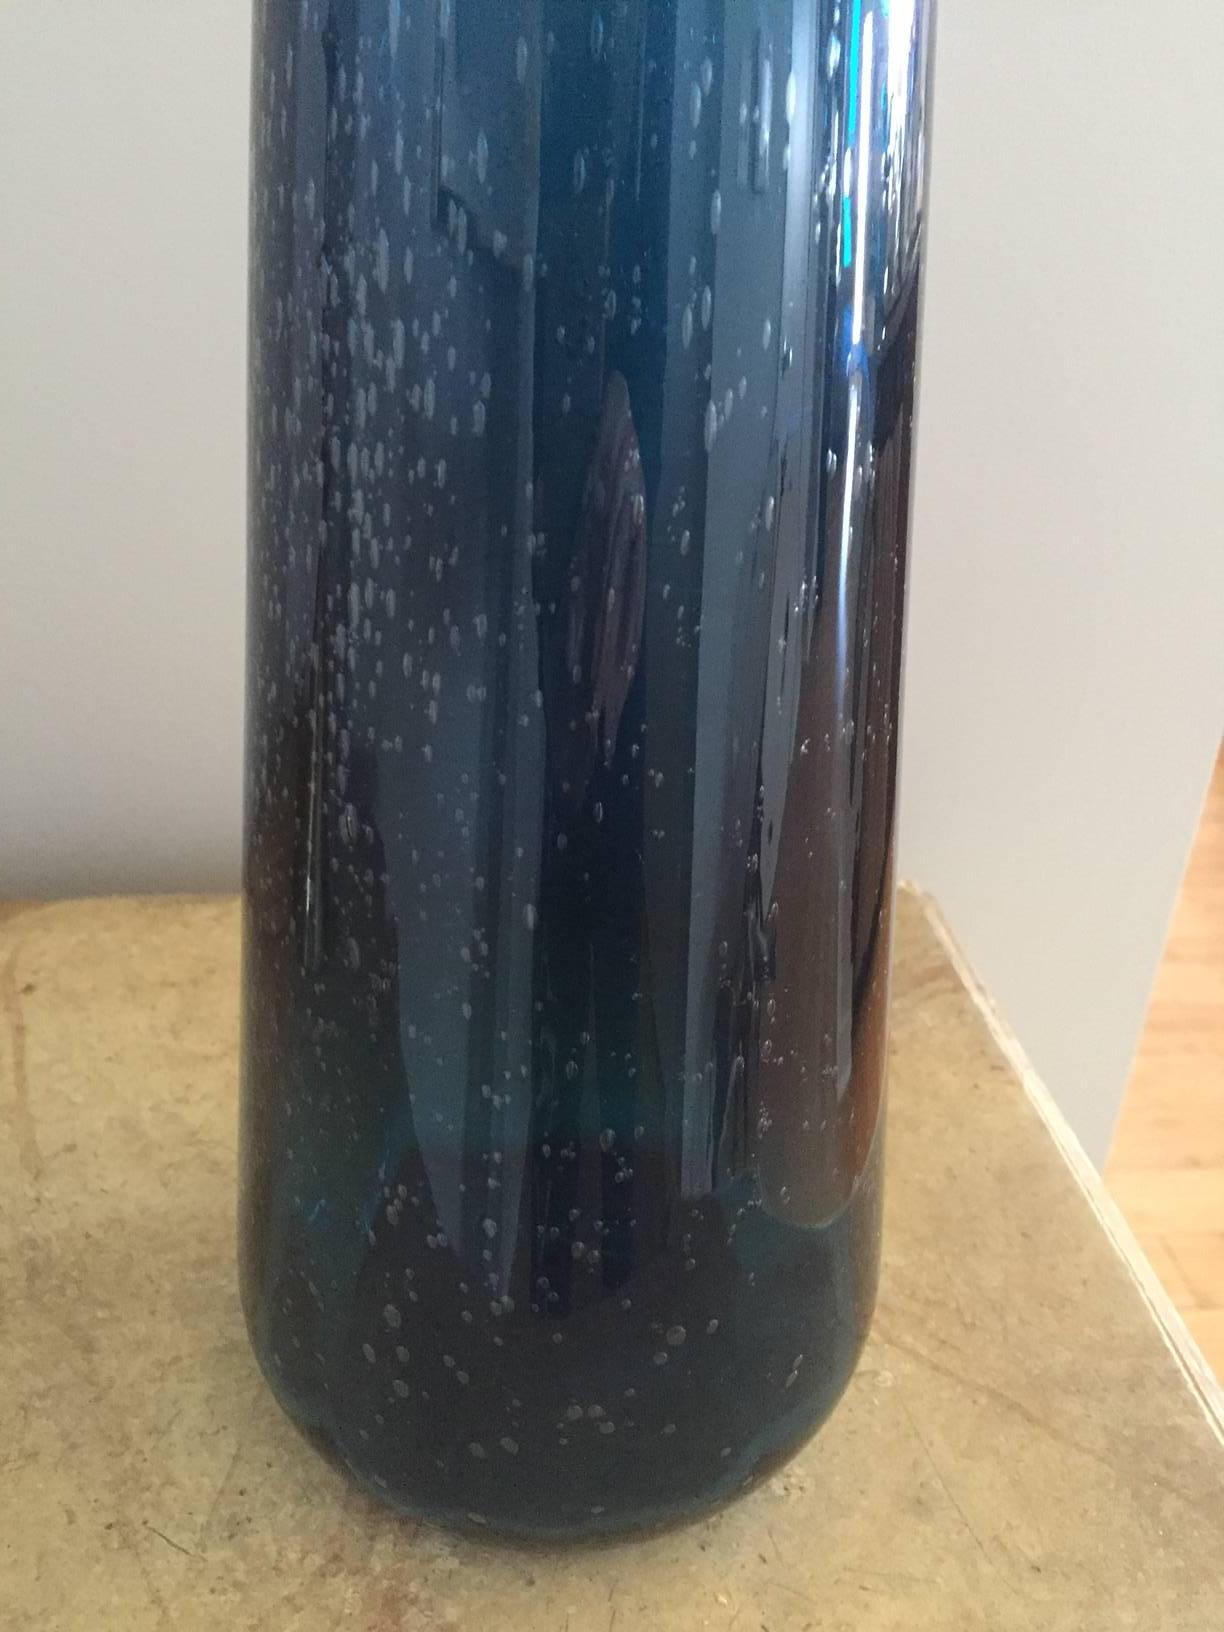 Deep blue glass vase signed by artist on bottom.